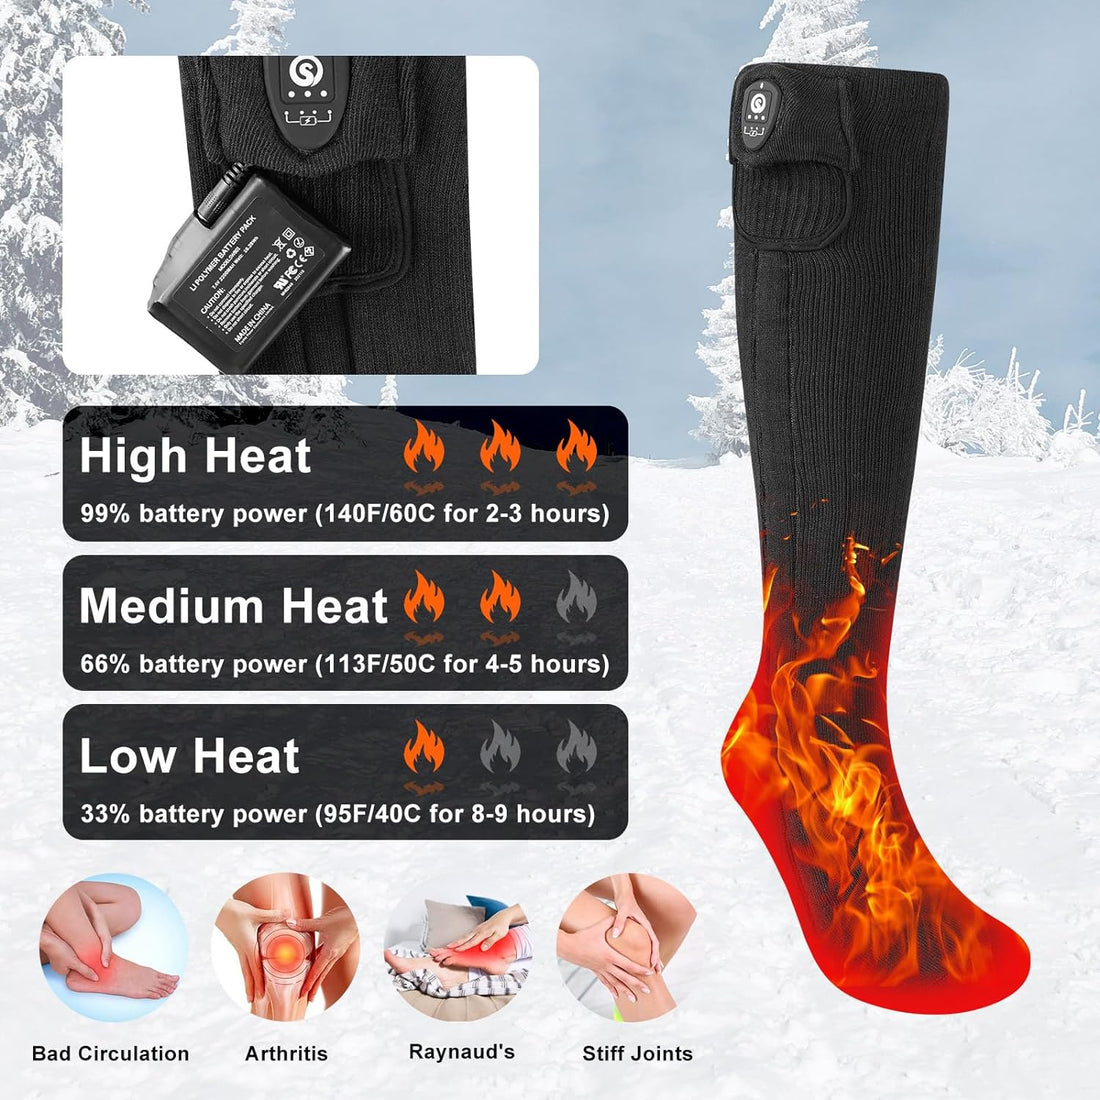 SAVIOR HEAT Heat Socks 2023 Upgraded - Rechargeable Electric Heated Socks with Bluetooth Control, 7.4V 2200mAh Battery